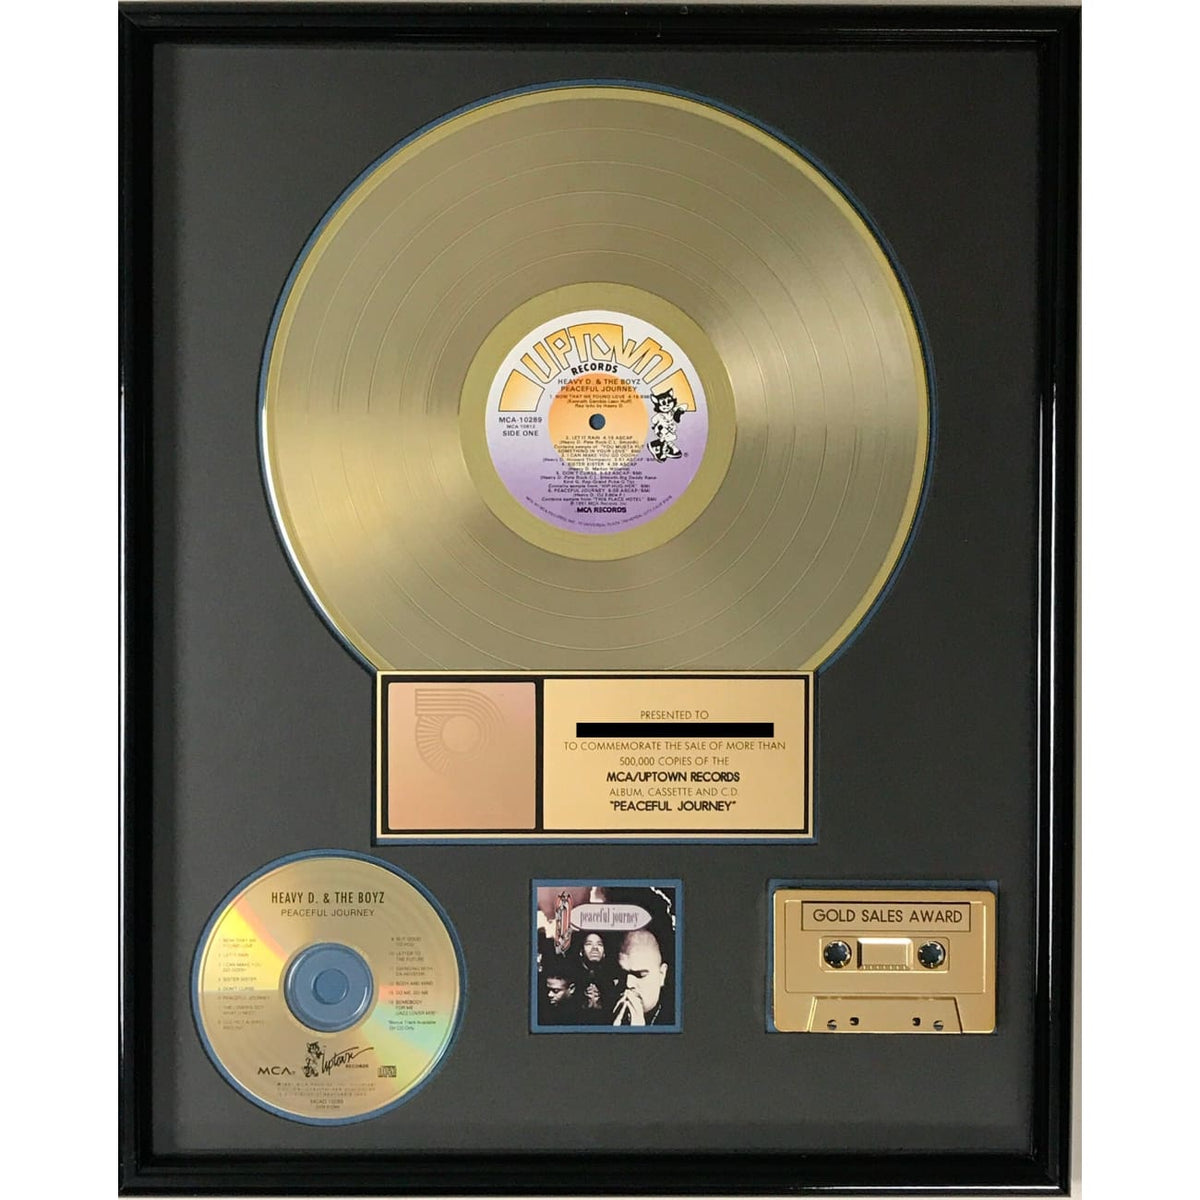 Heavy D & the Boyz Peaceful Journey RIAA Gold Album Award